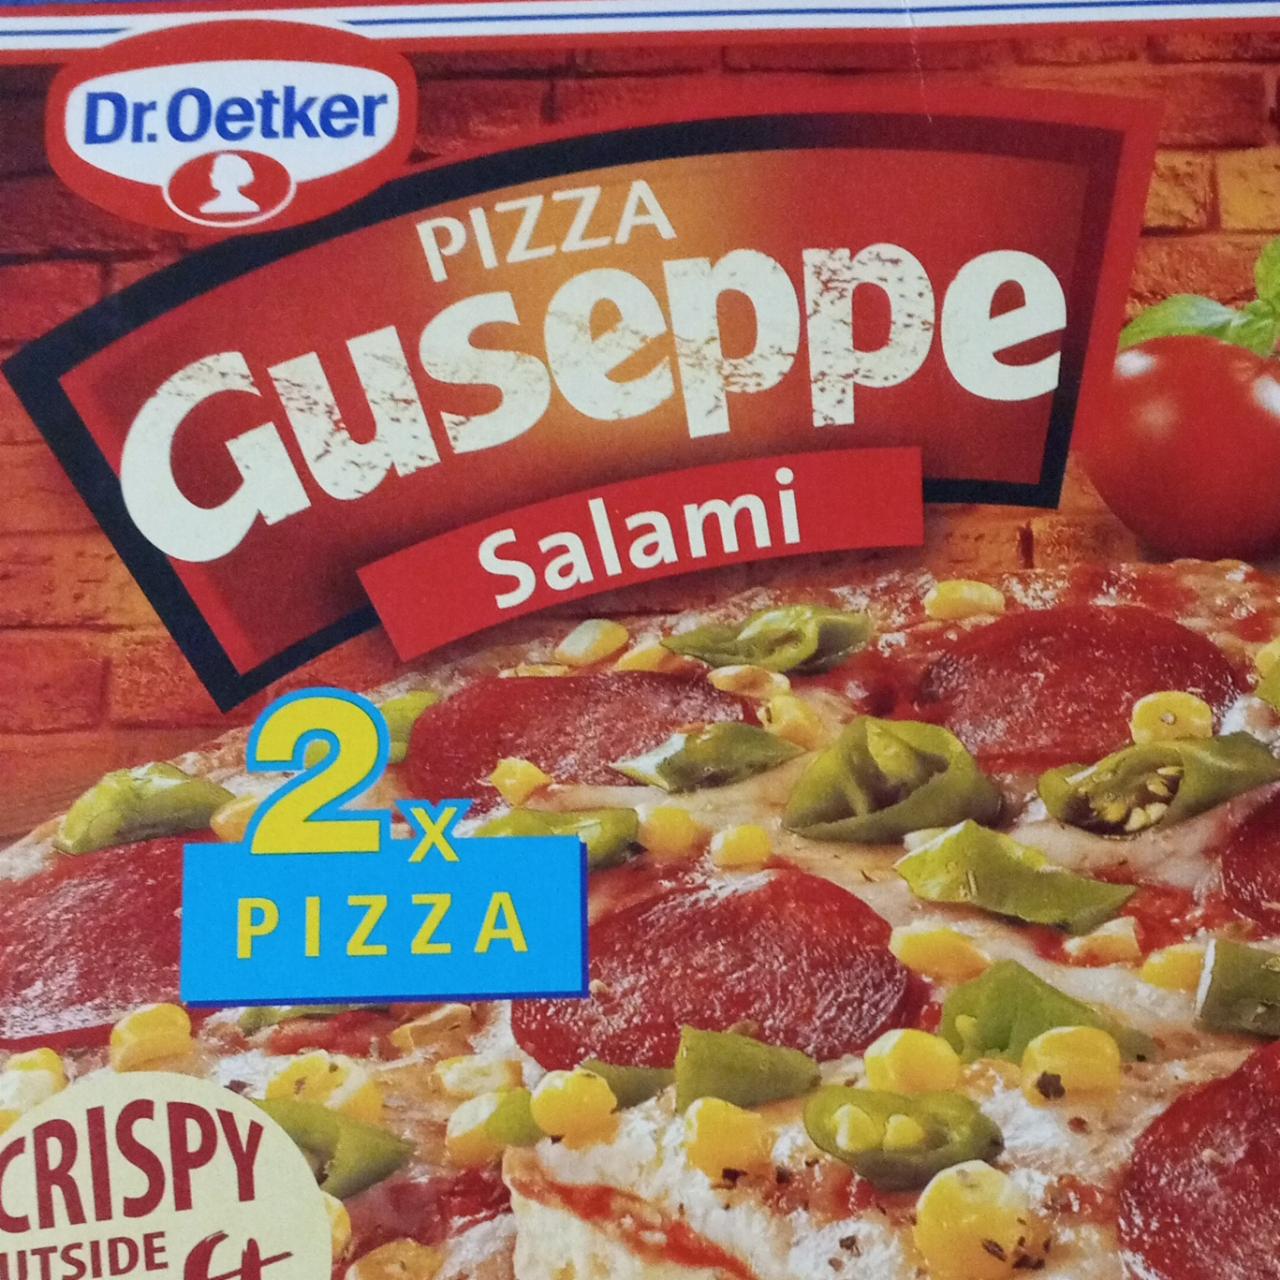 Фото - Pizza Guseppe z salami gleboko mrozona Dr.Oetker